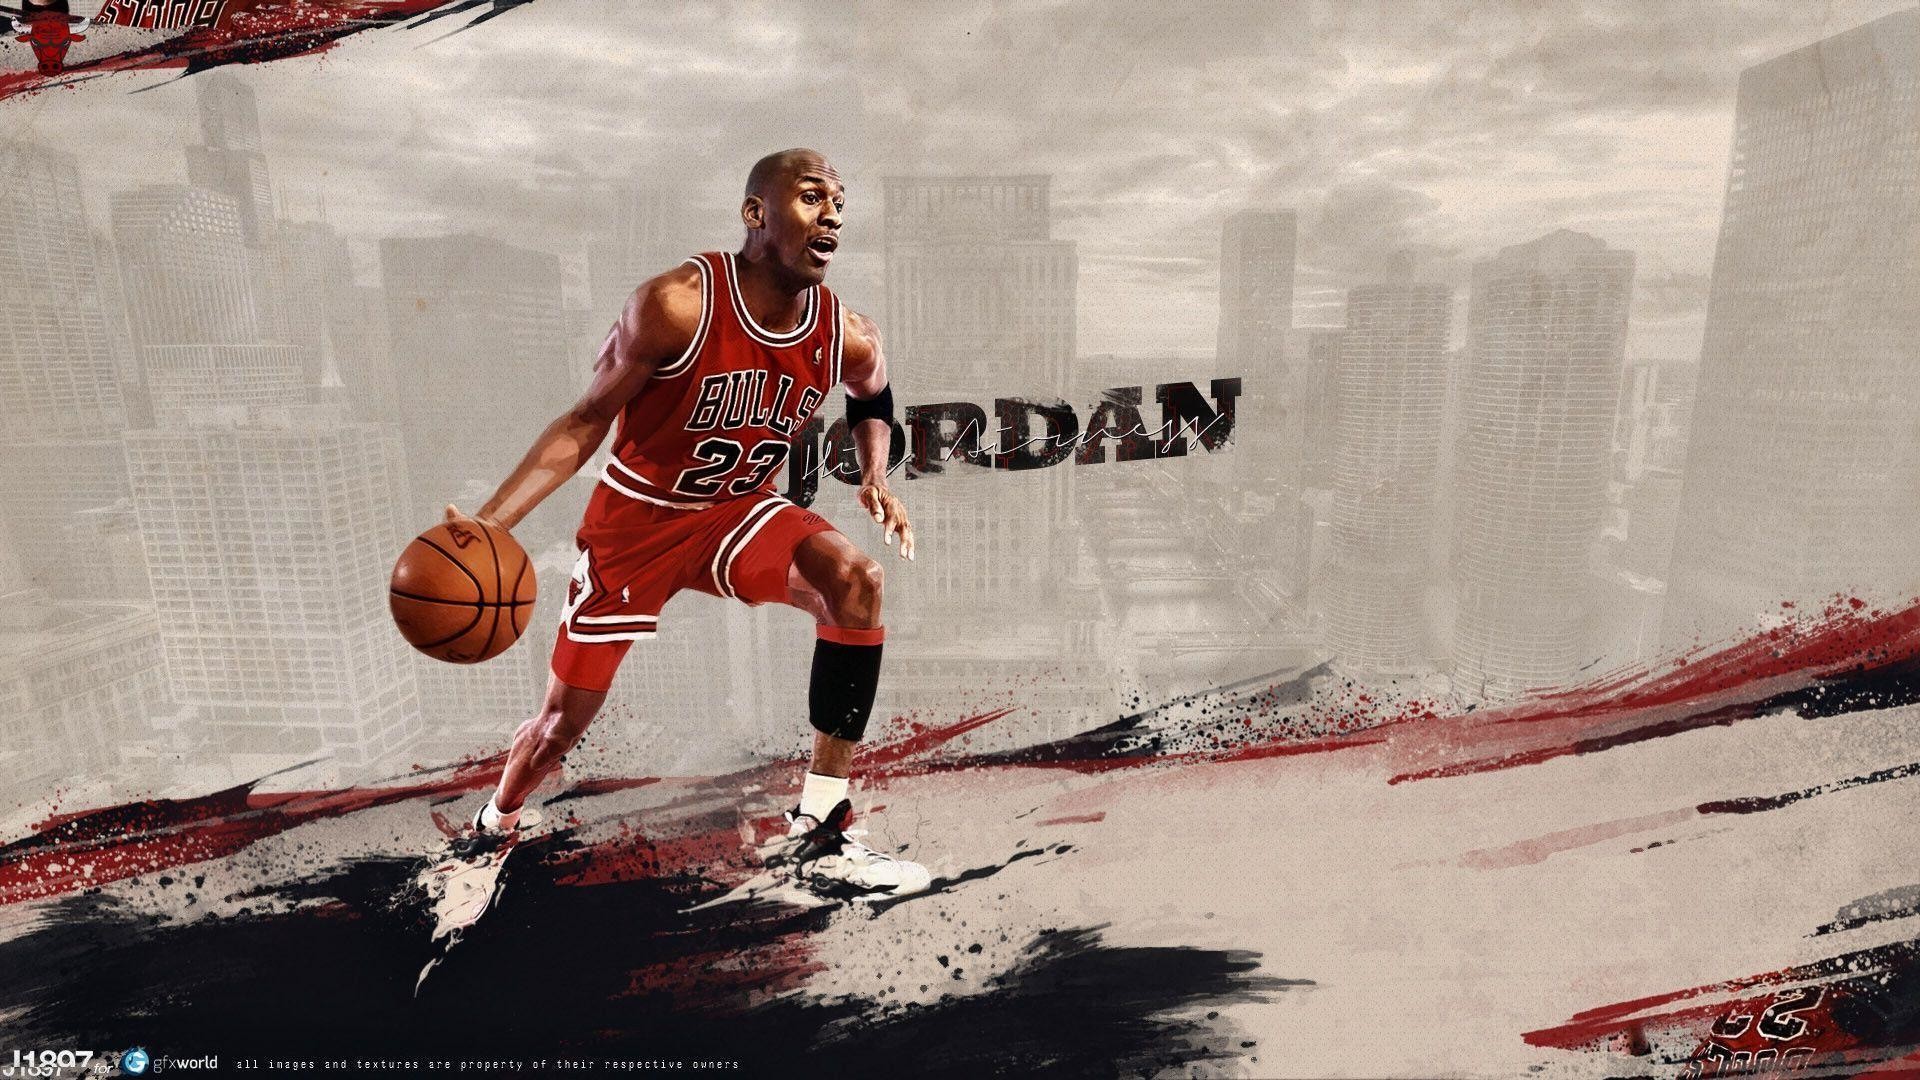 1920x1080 Michael Jordan - 1920 x 1080 HDTV 1080p wallpaper - Wallpaper Gallery